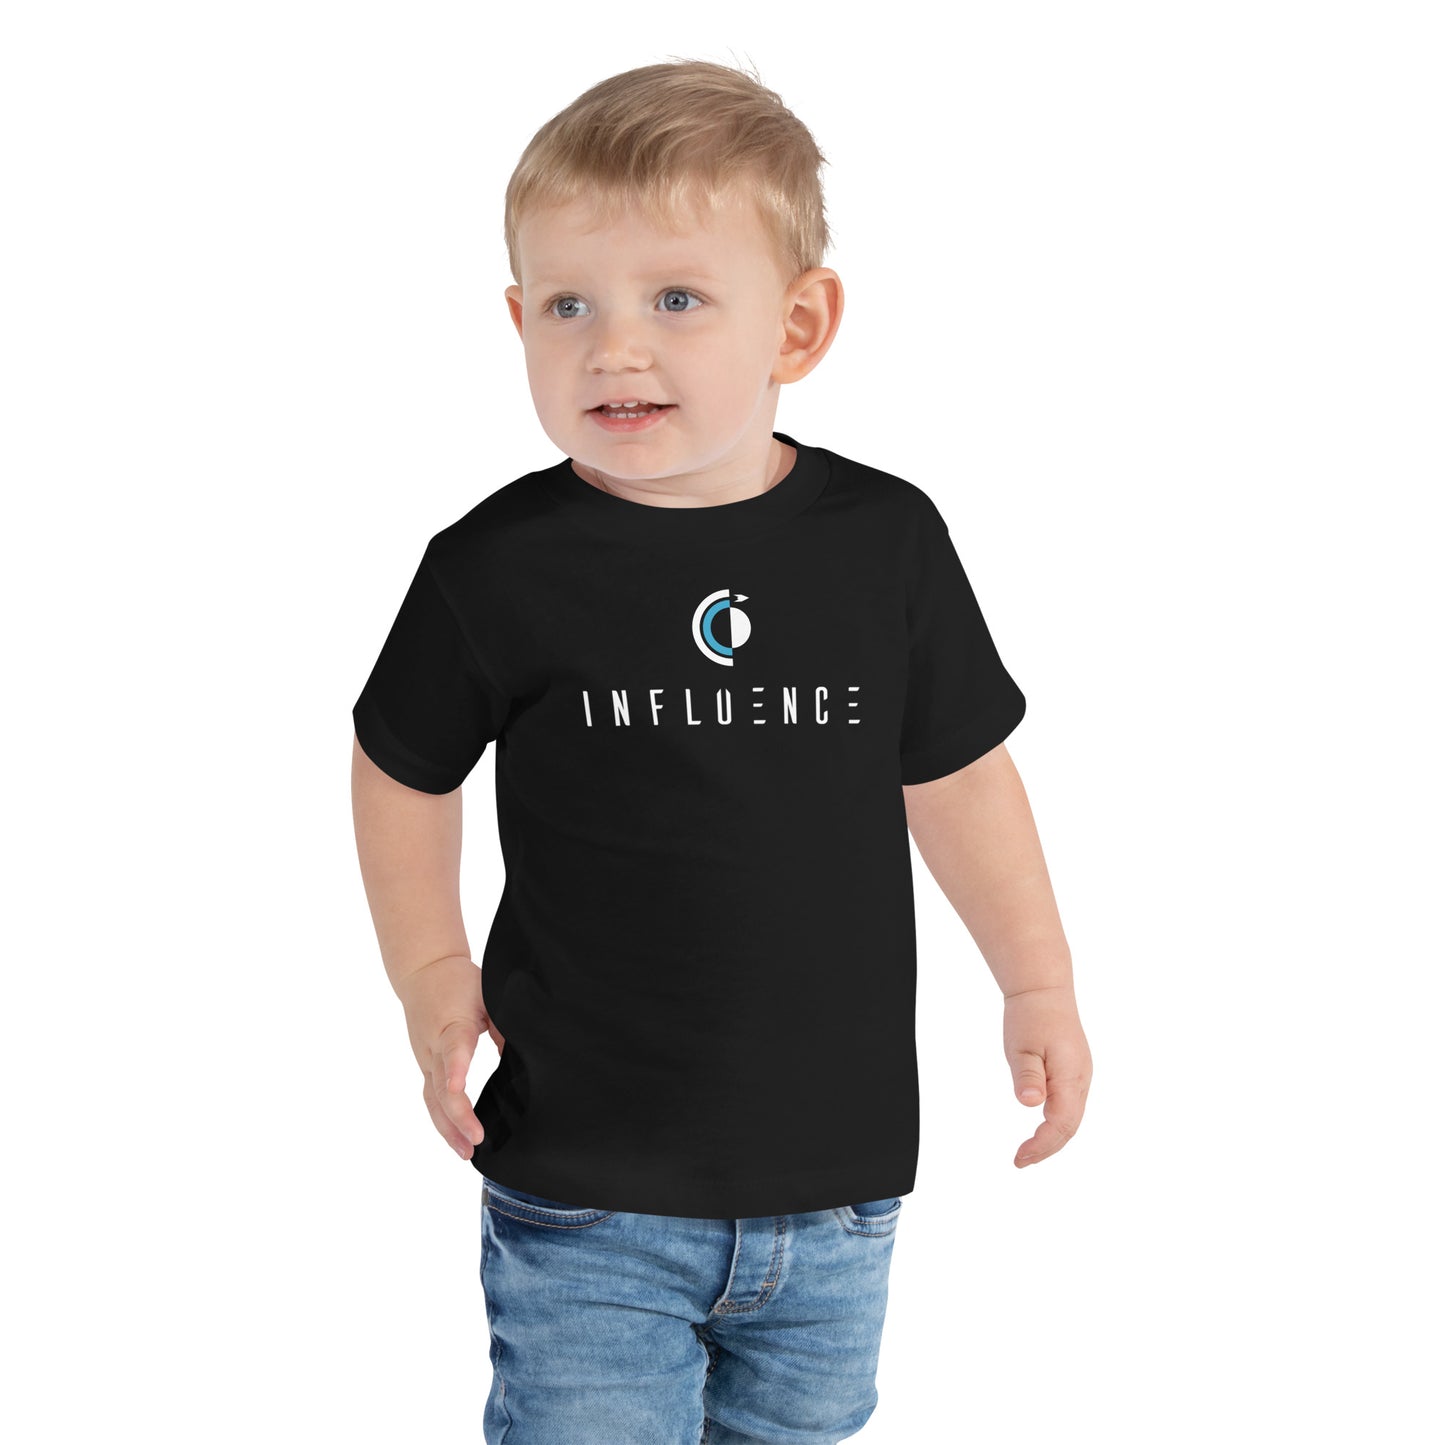 Influence Toddler Shirt